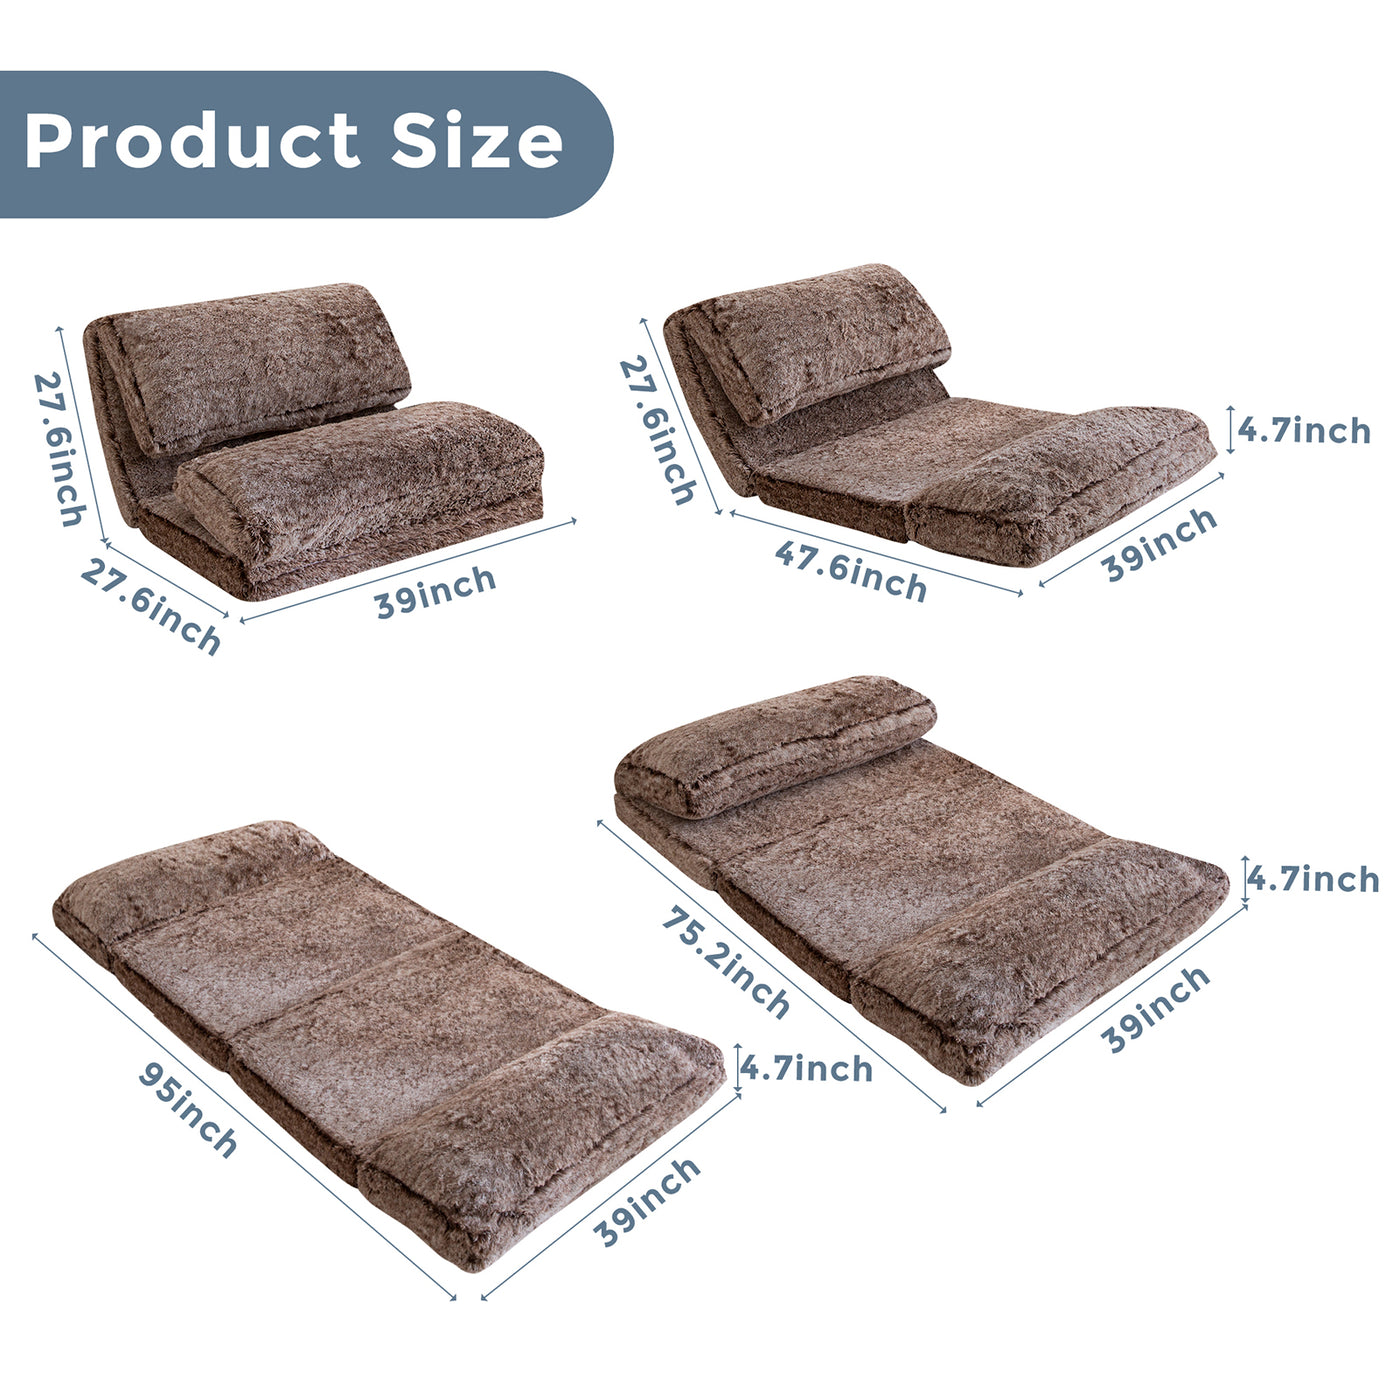 MAXYOYO Bean Bag Folding Floor Sofa Bed, Faux Fur Foam Filling Wall Couch Sleeper Chairs, Coffee